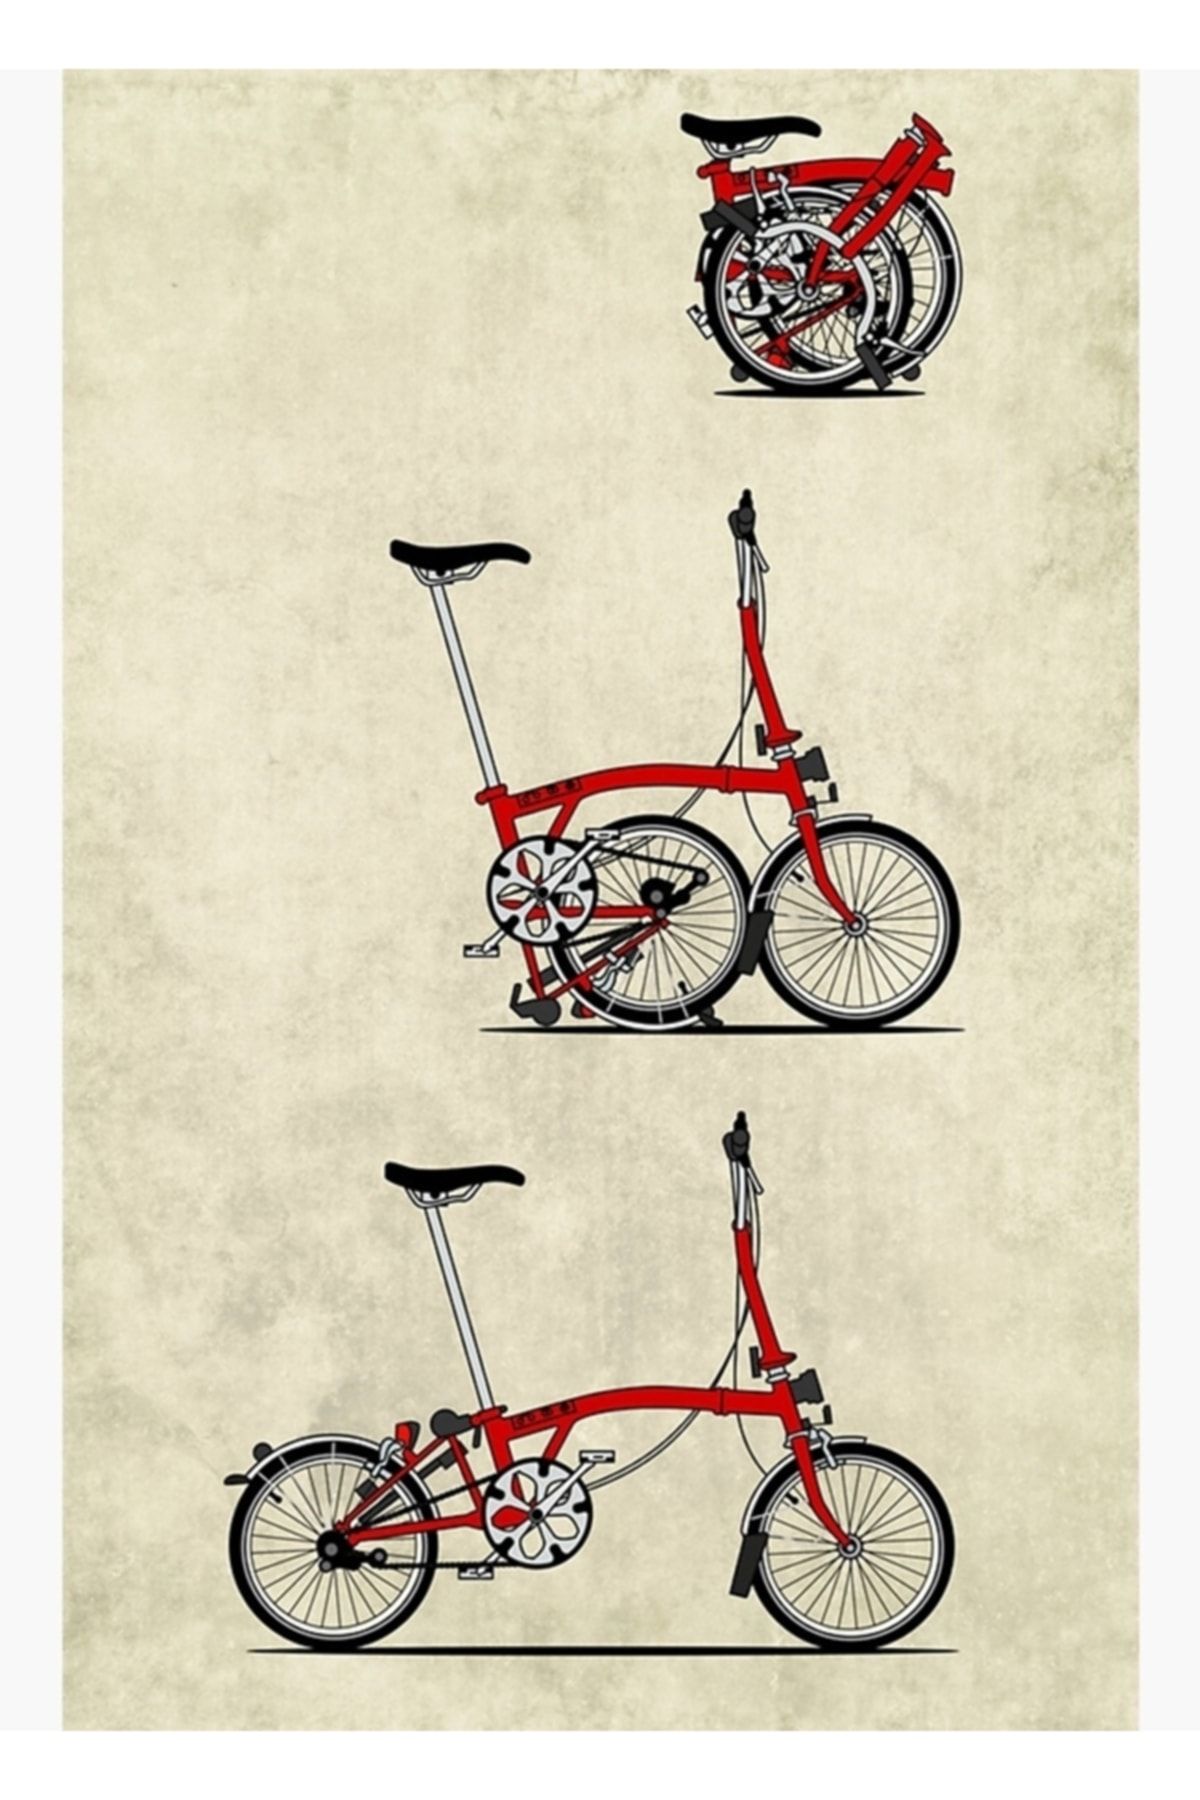 Universal Katlanır Brompton Bisikletimi Seviyorum Tablo Ahşap Poster Dekoratif